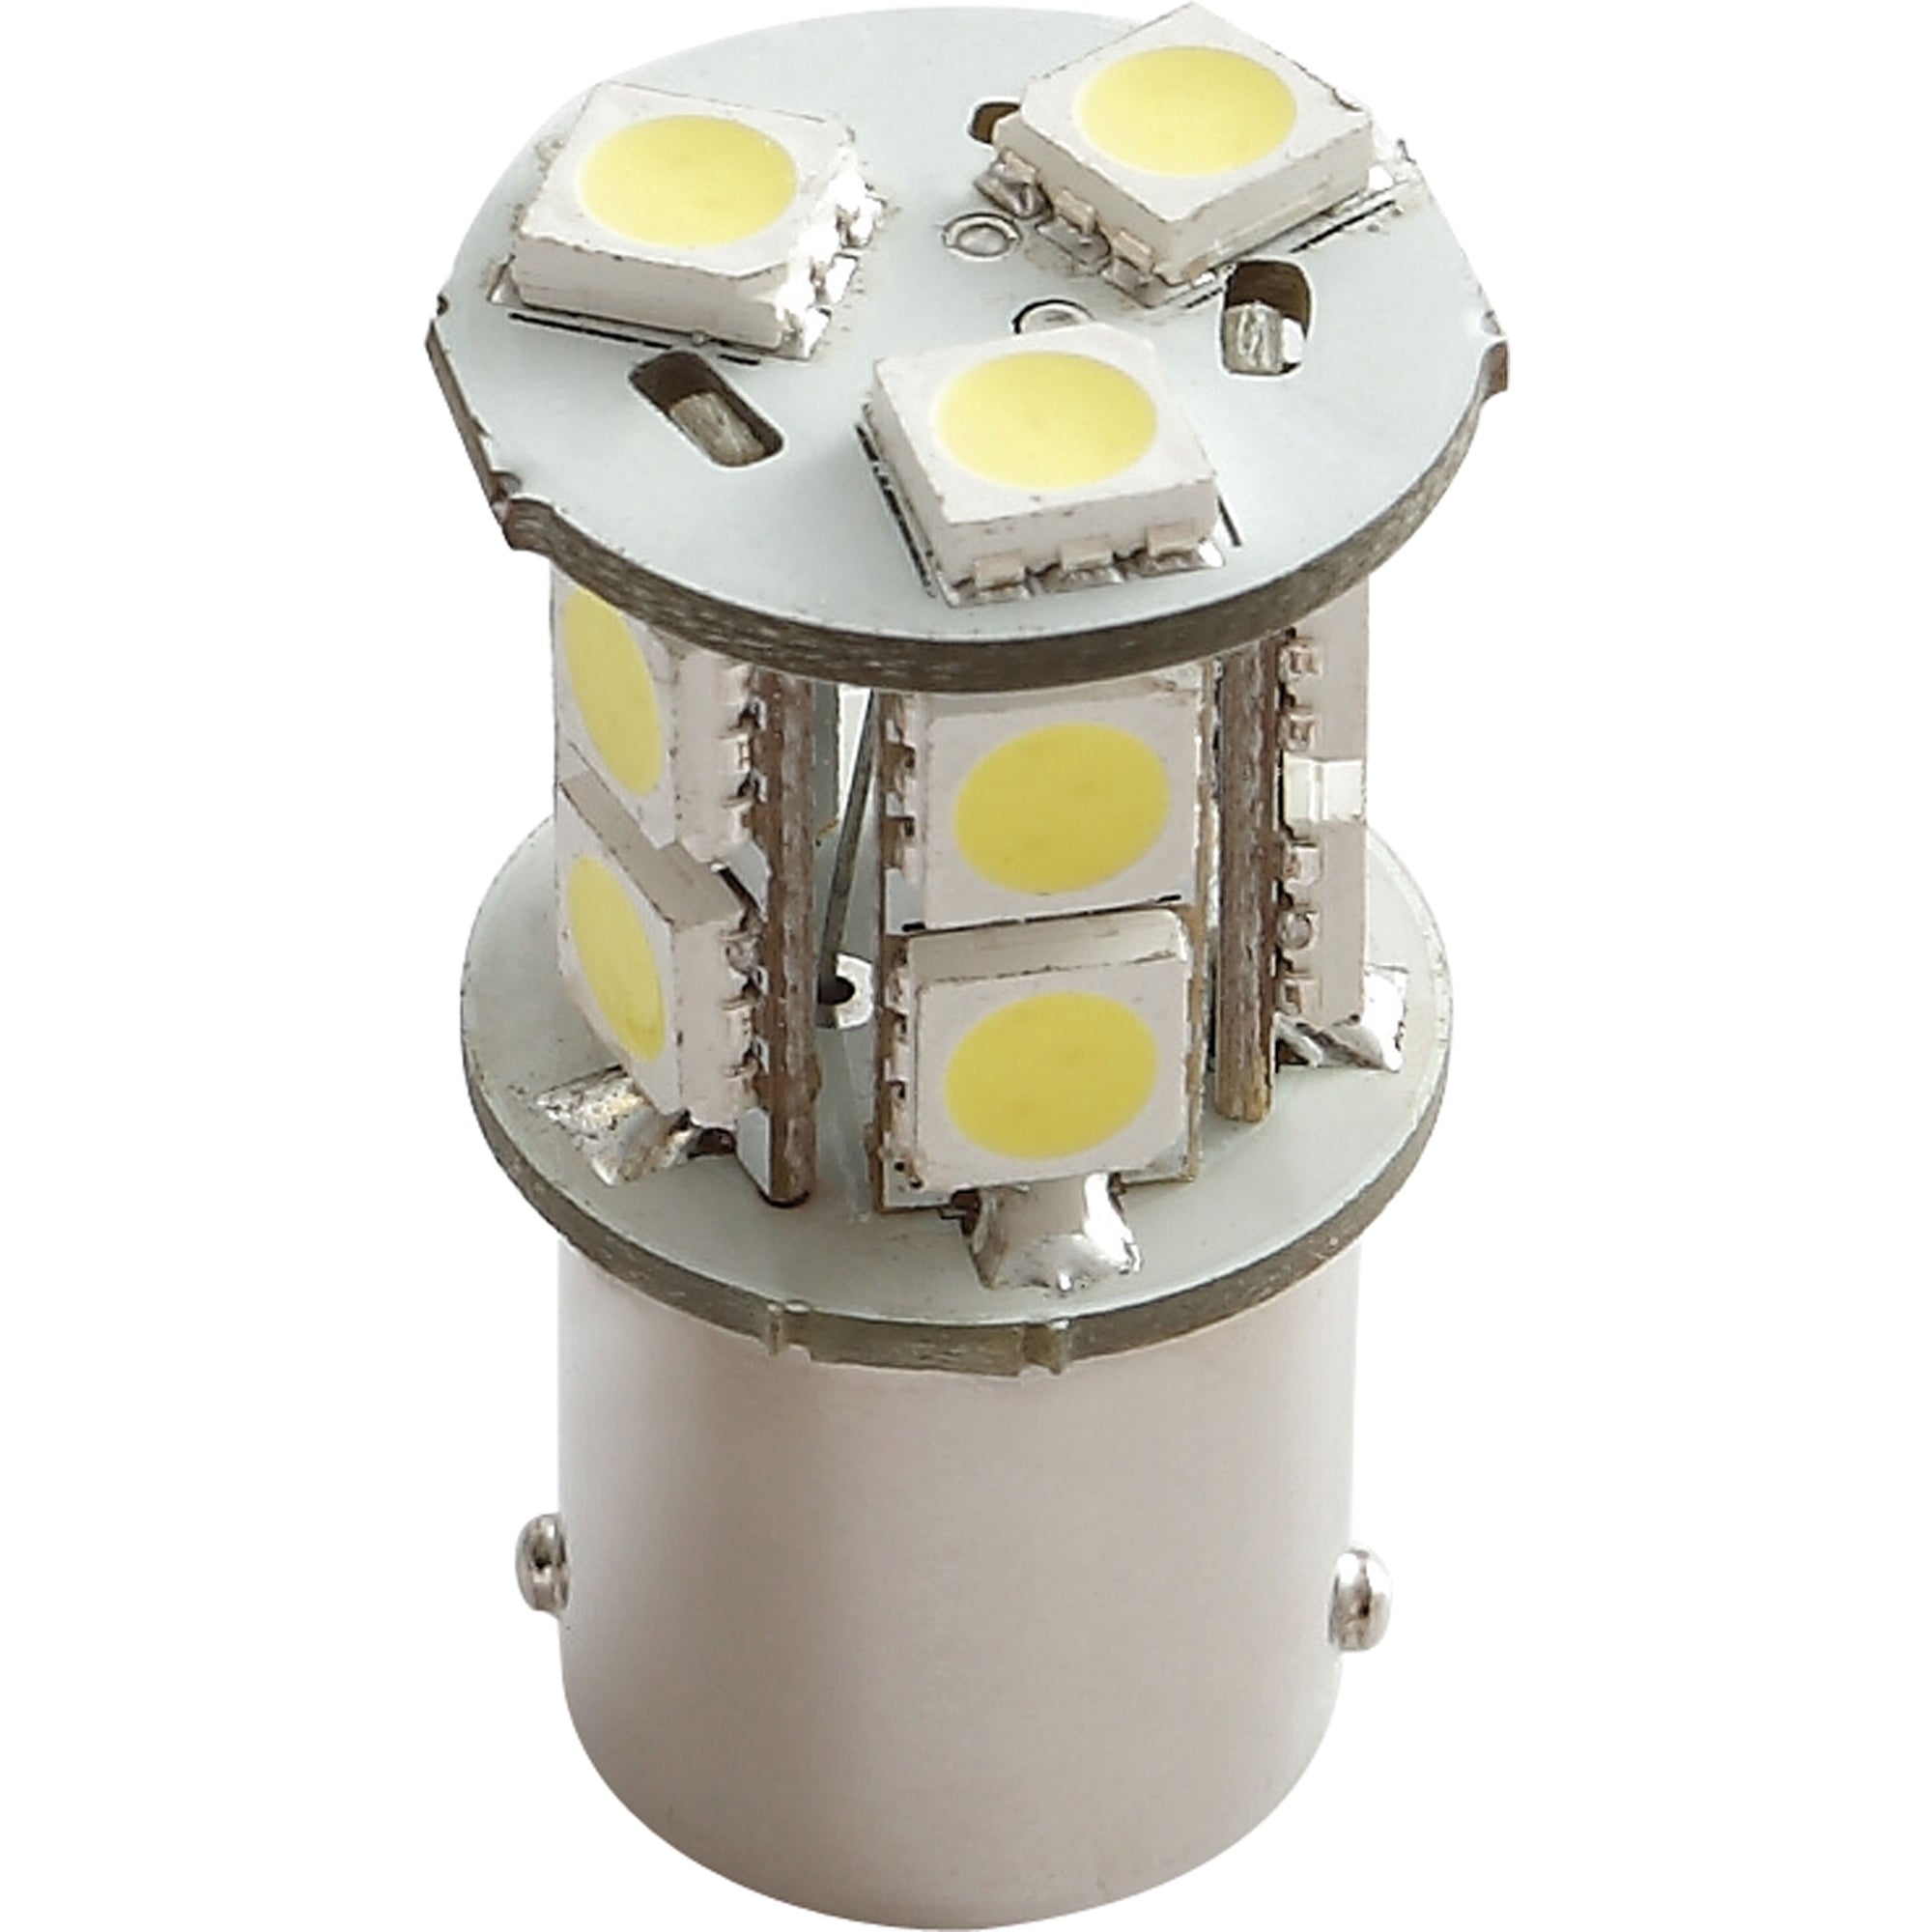 Ming's Mark 5050117 Green LongLife 12V LED Tower Light Bulb with 1156/1141 Base - 170 Lumens, Cool White